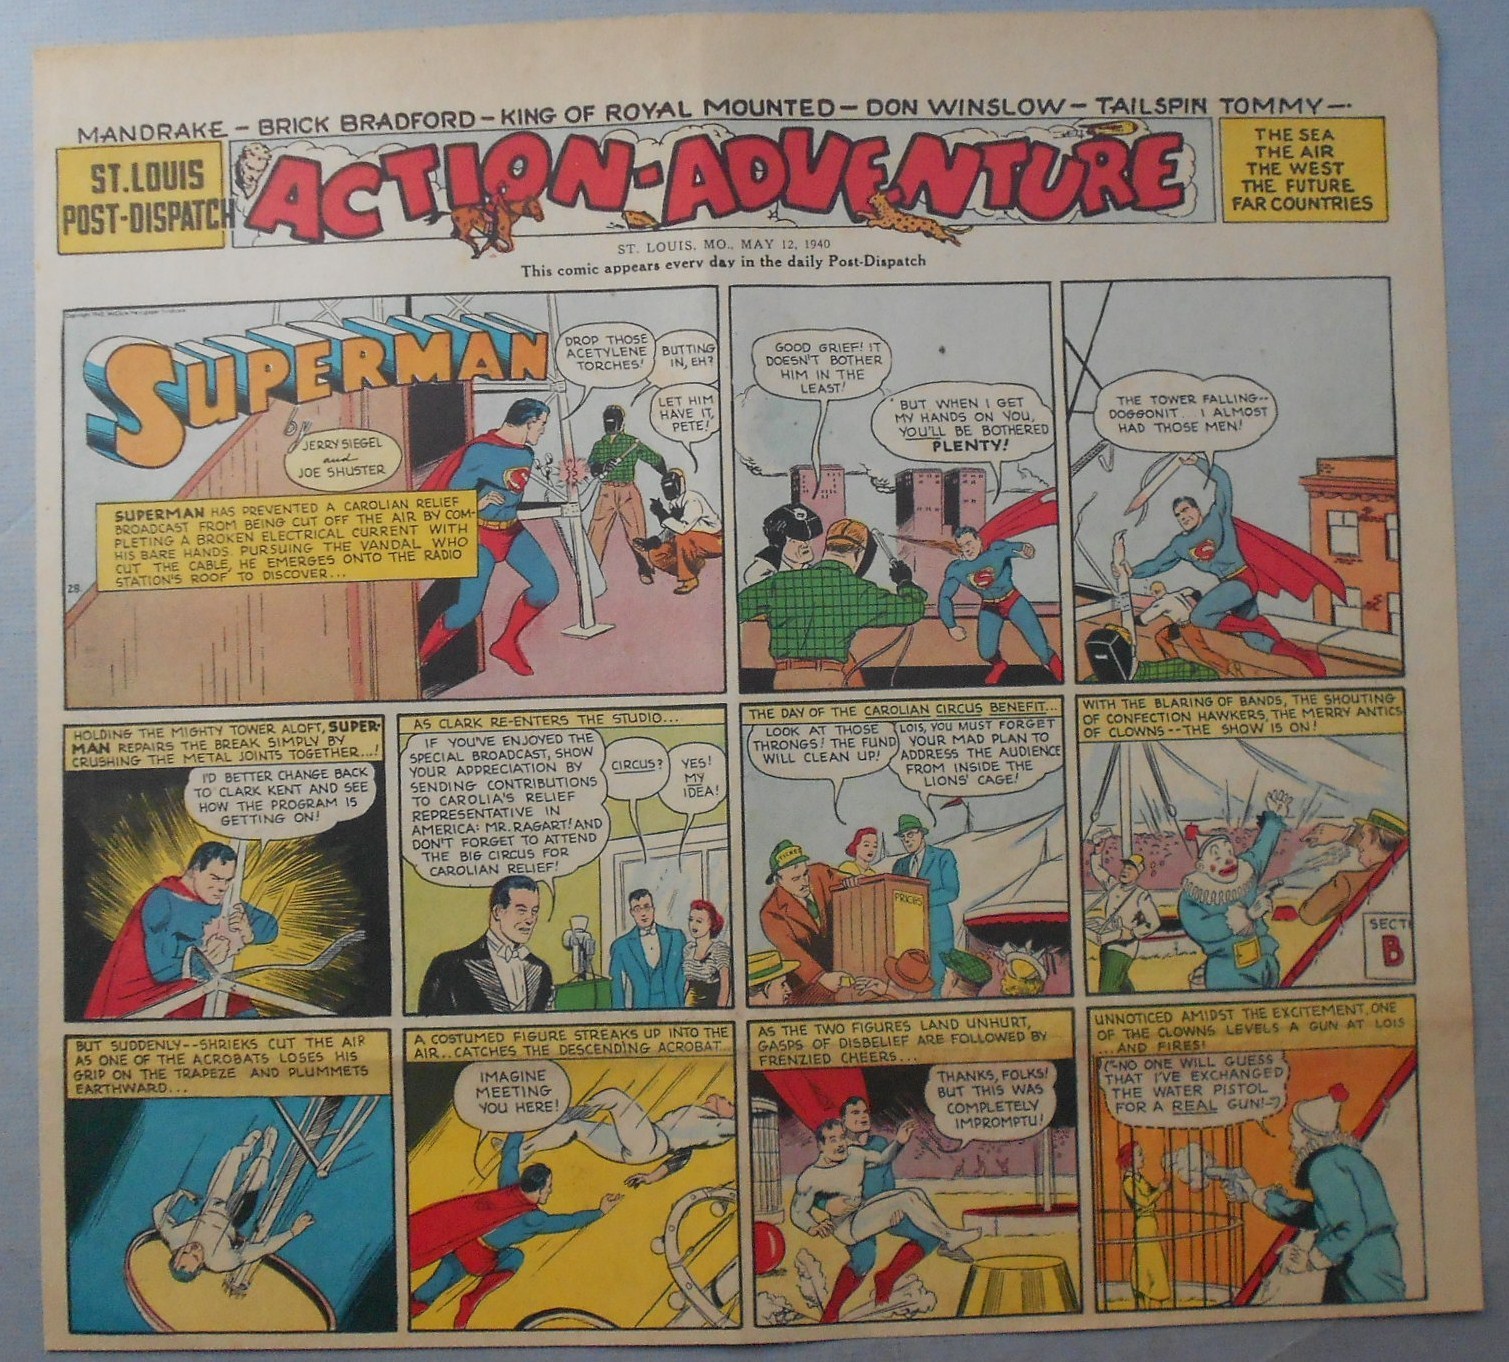 Pop Culture Safari!: Vintage Sunday Superman comic strips from the St. Louis Dispatch